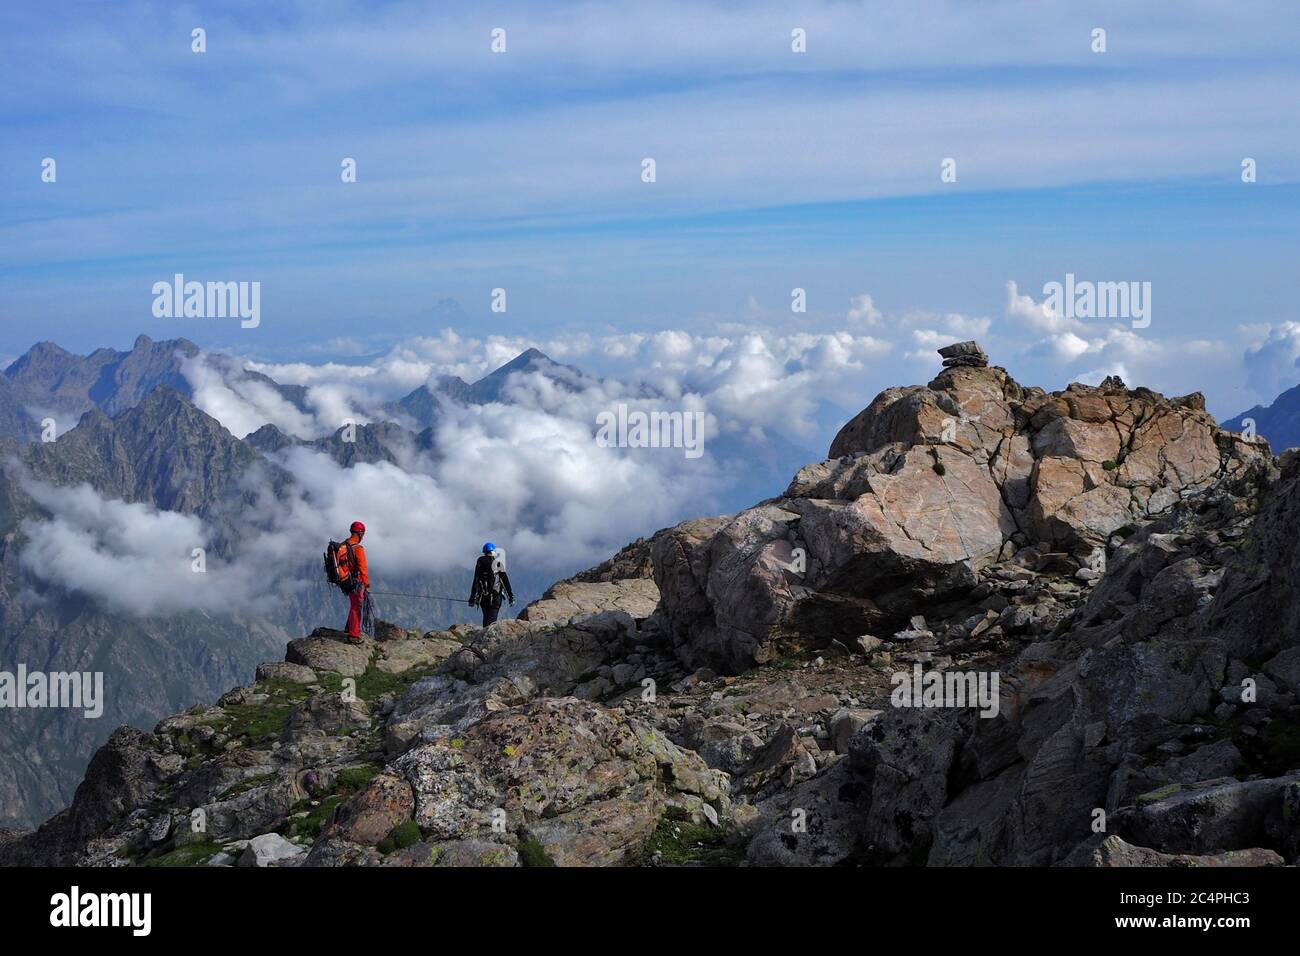 Mountaineers climb on a rocky rjdge, Alpi Marittime, Italy Stock Photo